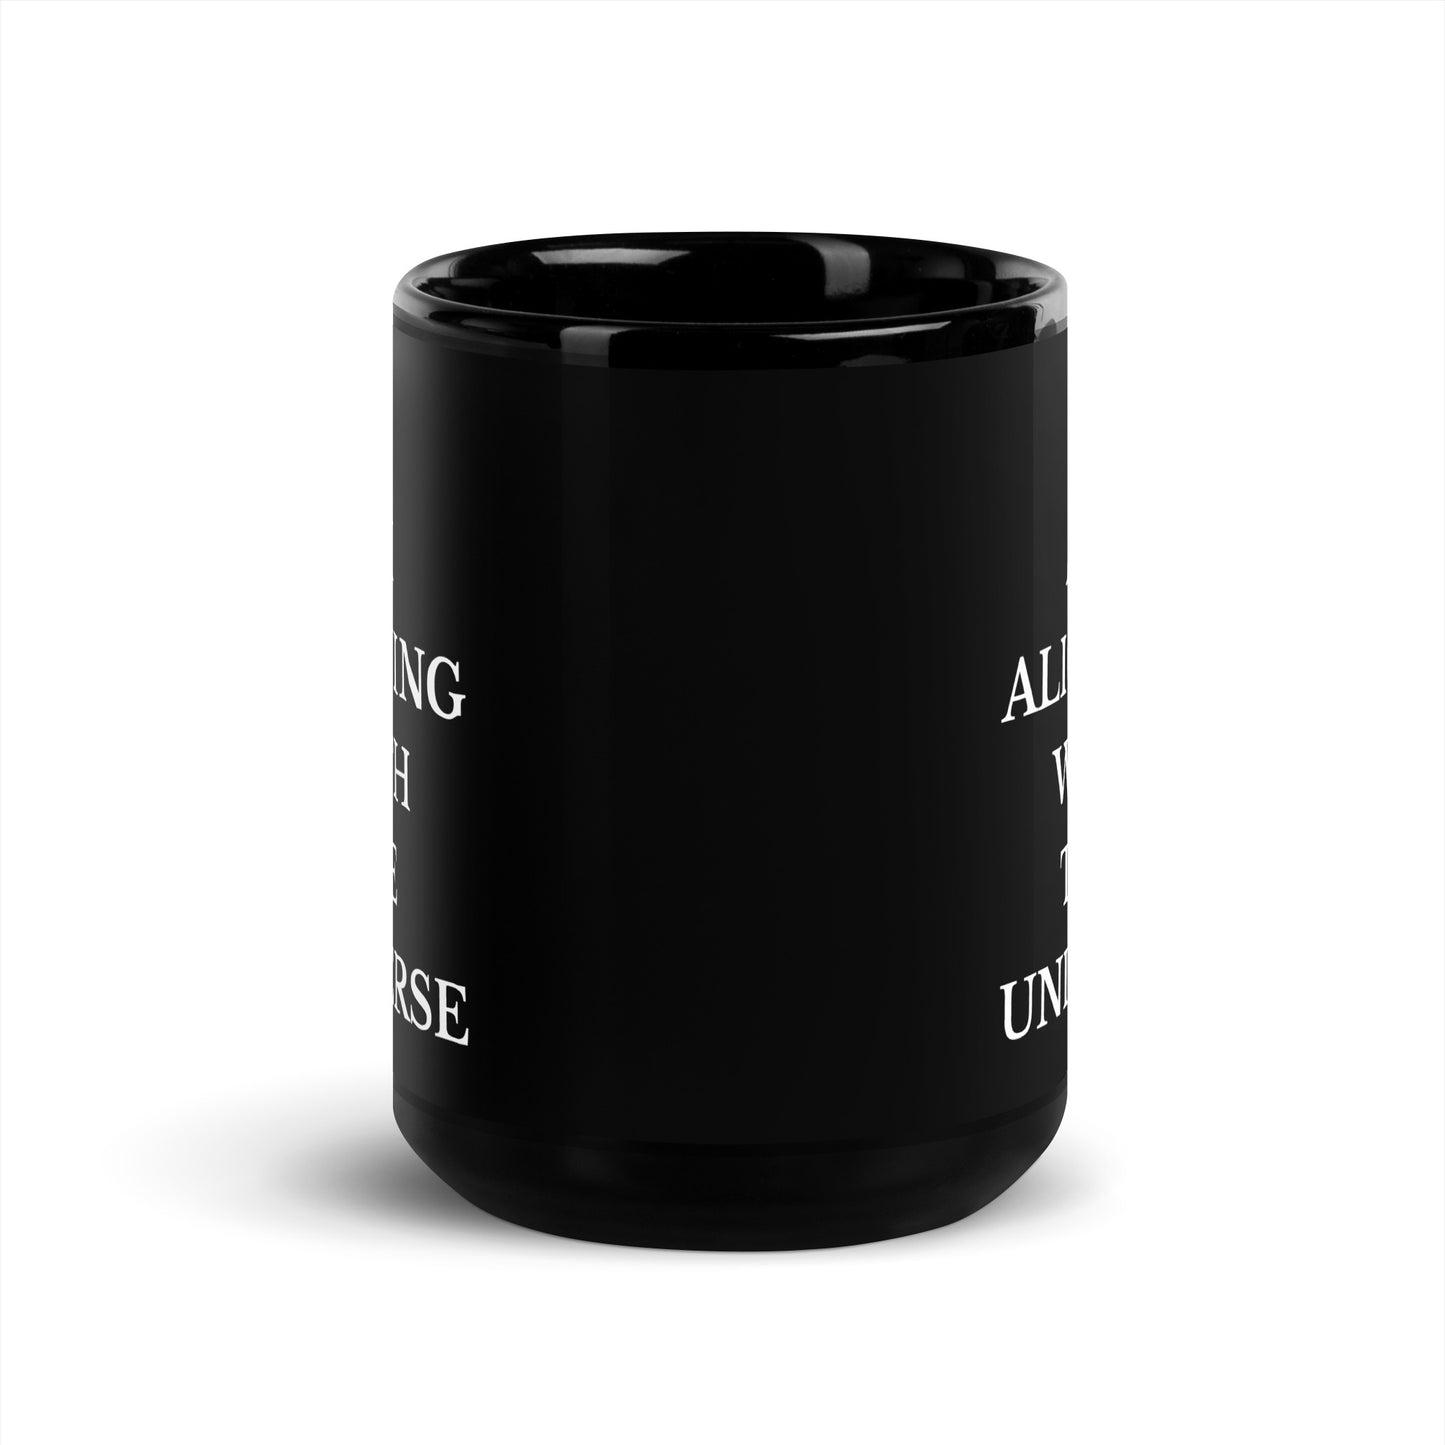 I Am Aligning WIth The Universe Motivational Black Coffee Mug